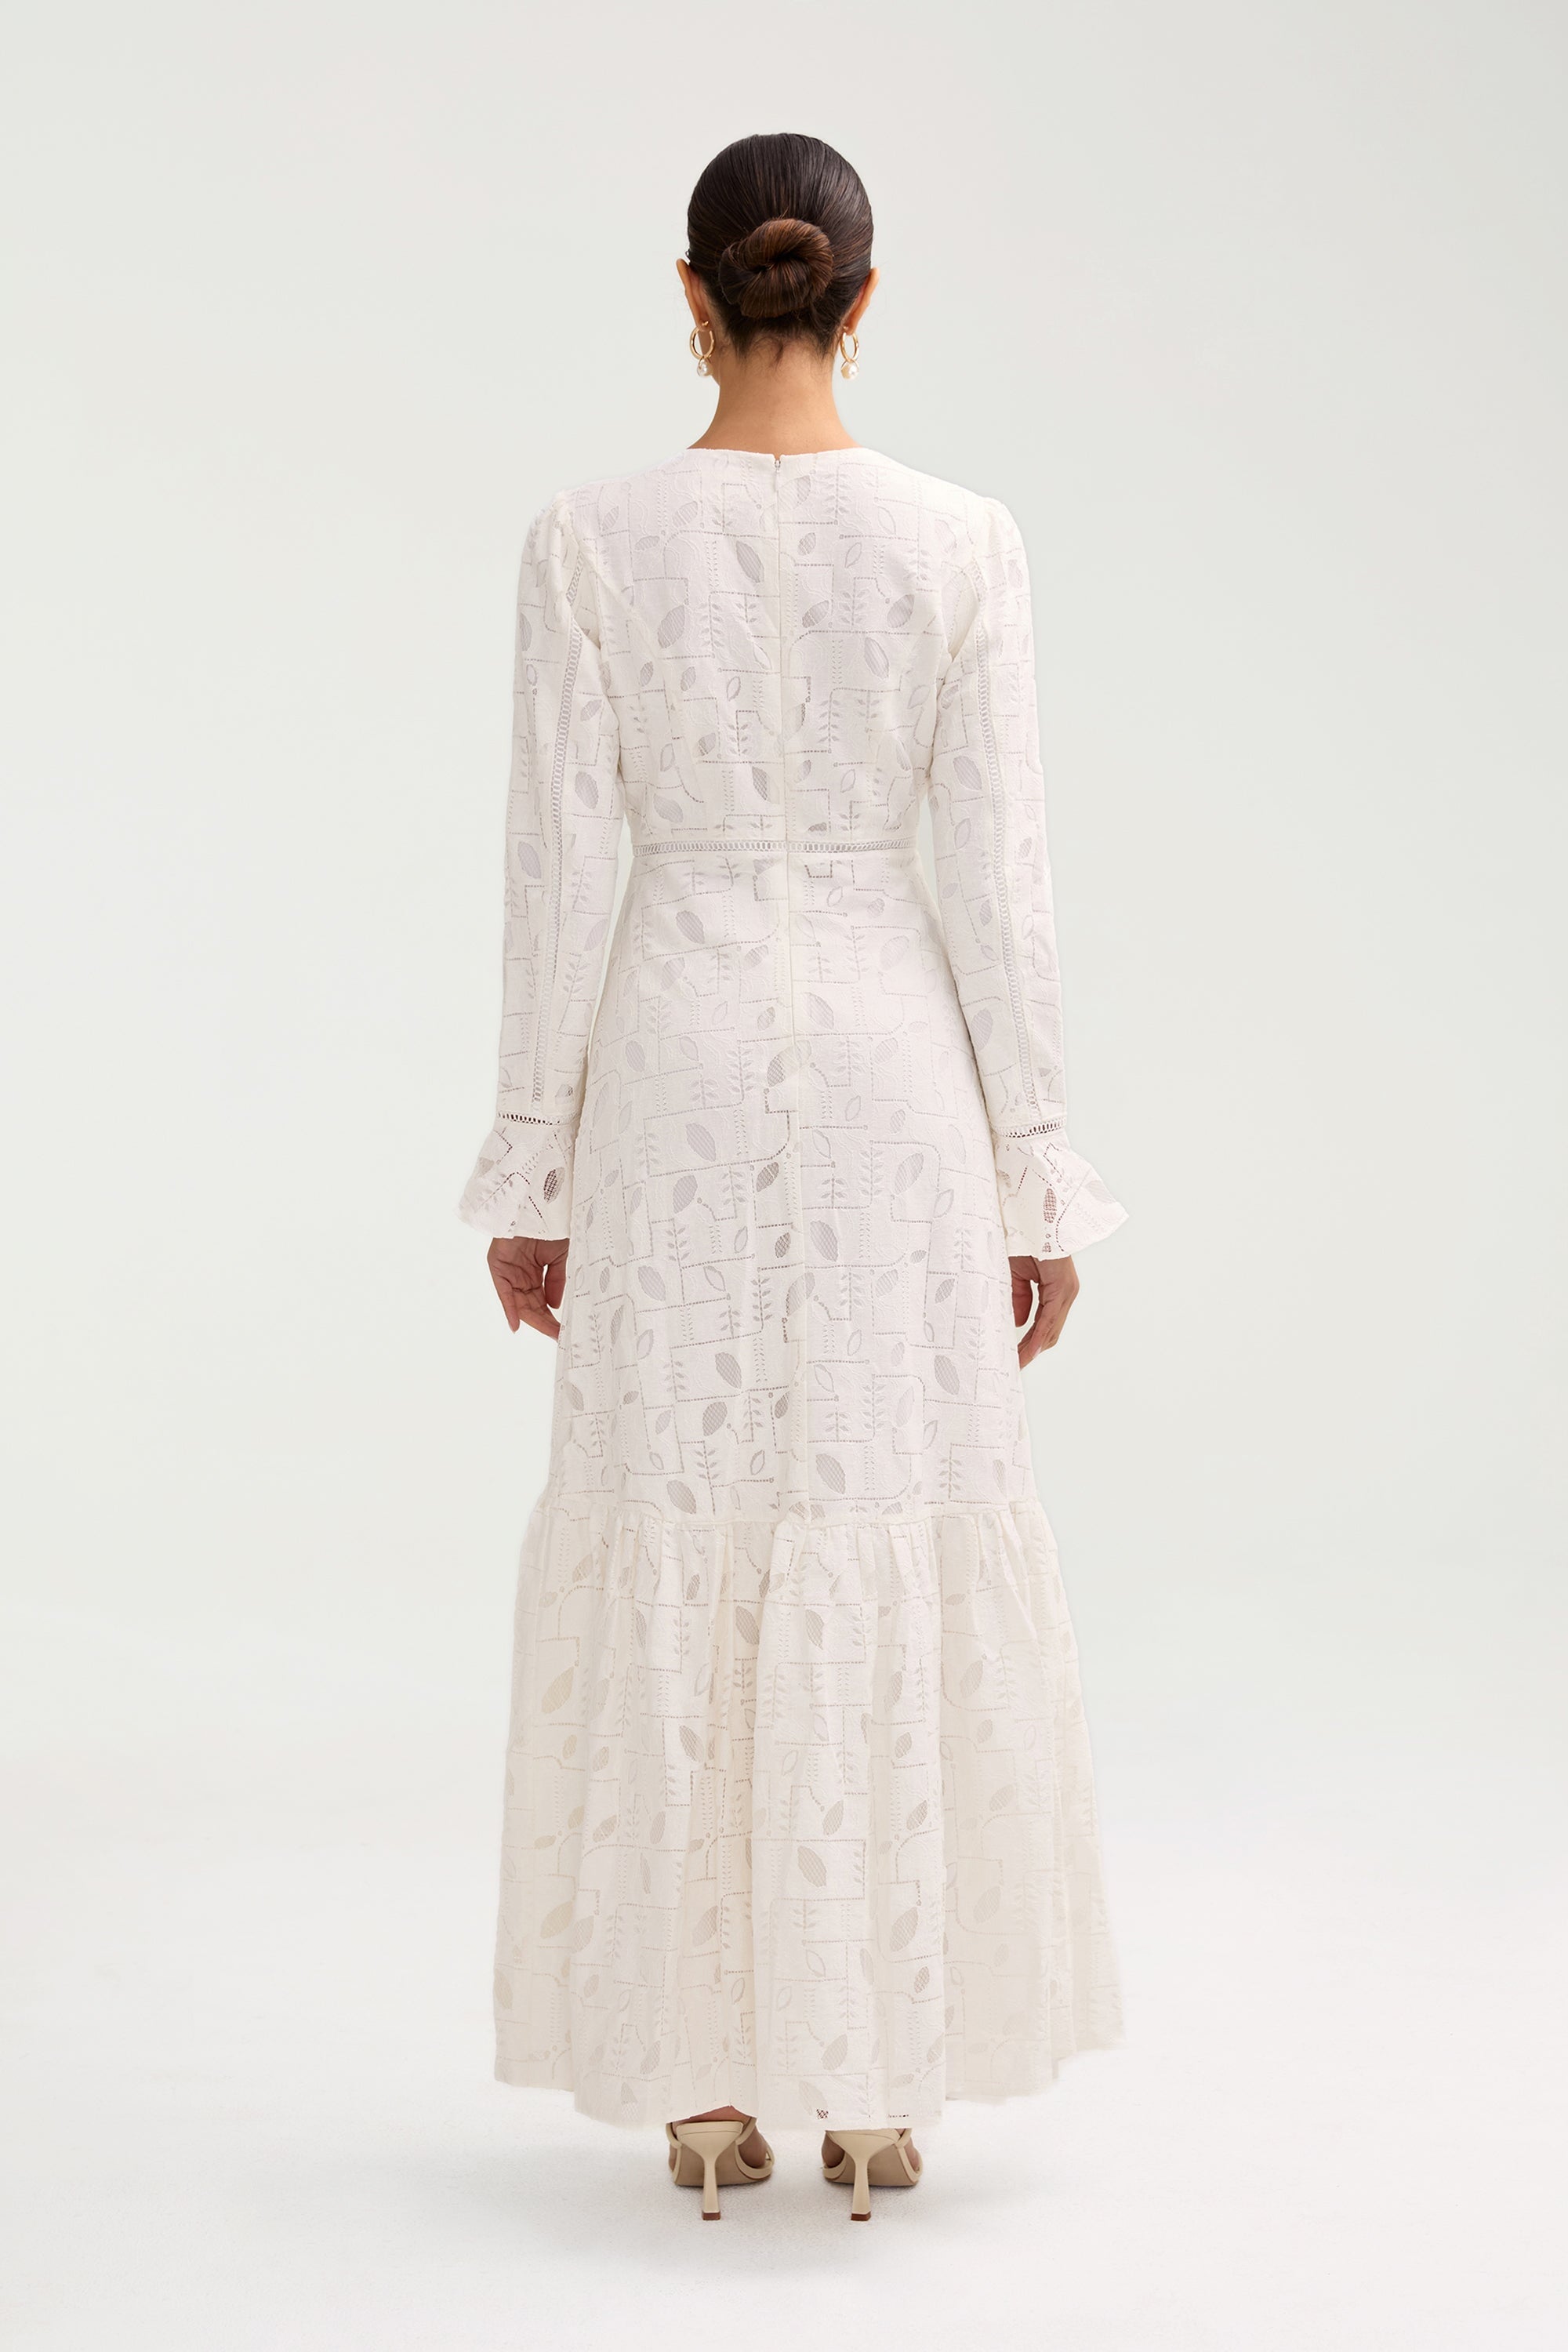 Rayaa White Lace Maxi Dress Clothing Veiled 